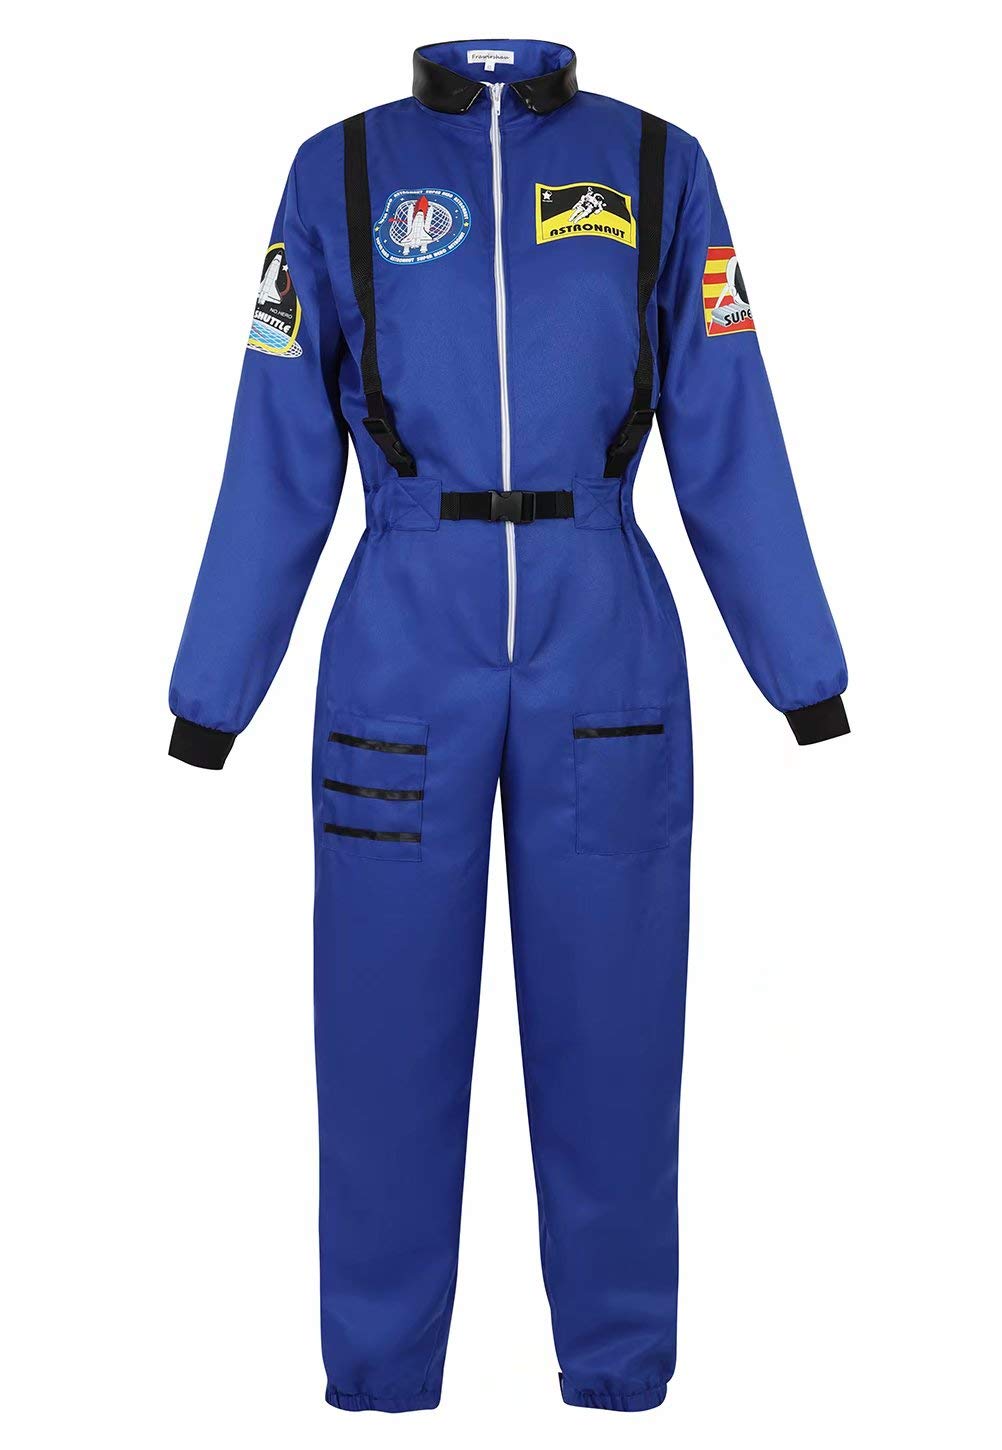 Josamogre Astronauten Kostüm Erwachsene Damen Kostüm Astronau Anzugt Weltraum Raumfahrer Cosplay Halloween Blau S